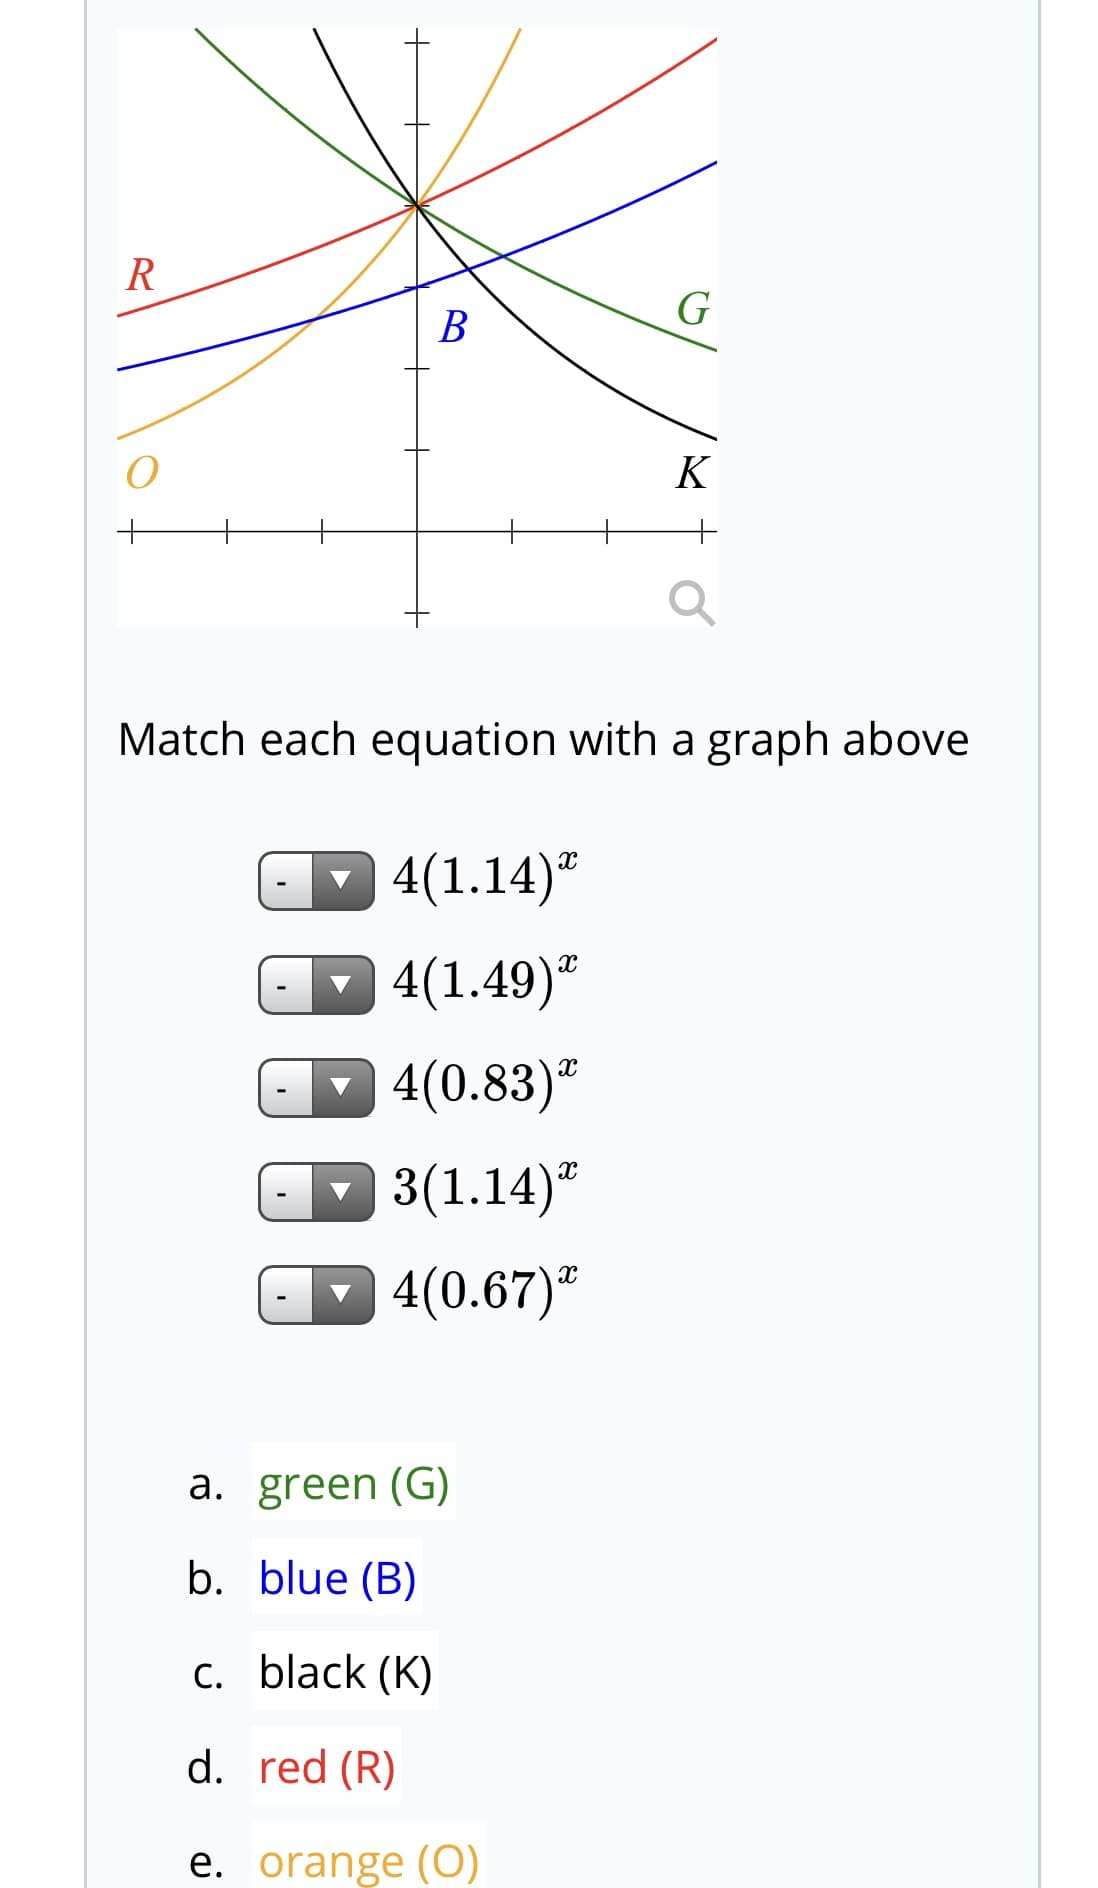 R
B
K
Match each equation with a graph above
4(1.14)®
4(1.49)*
4(0.83)"
3(1.14)"
4(0.67)"
a. green (G)
b. blue (B)
C. black (K)
d. red (R)
e. orange (O)
